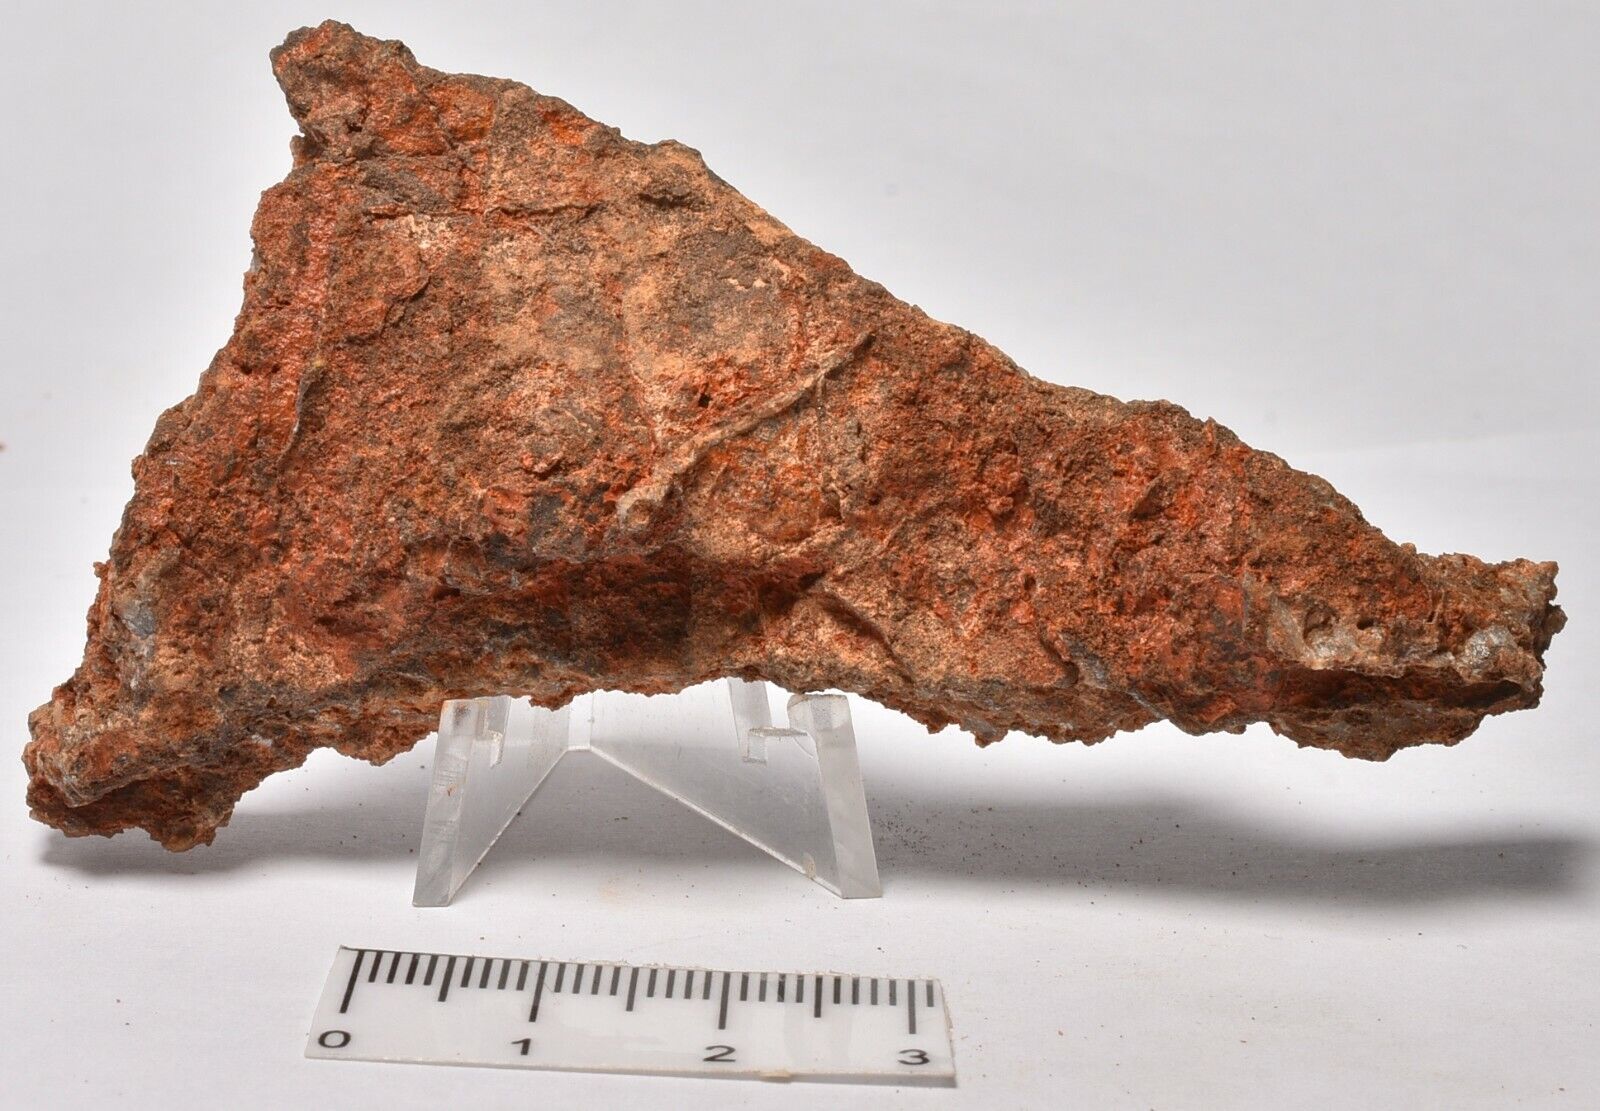 MICROBIAL MAT, Dresser Fmt, Stromatolite, North Pole Dome 30 grams SM101